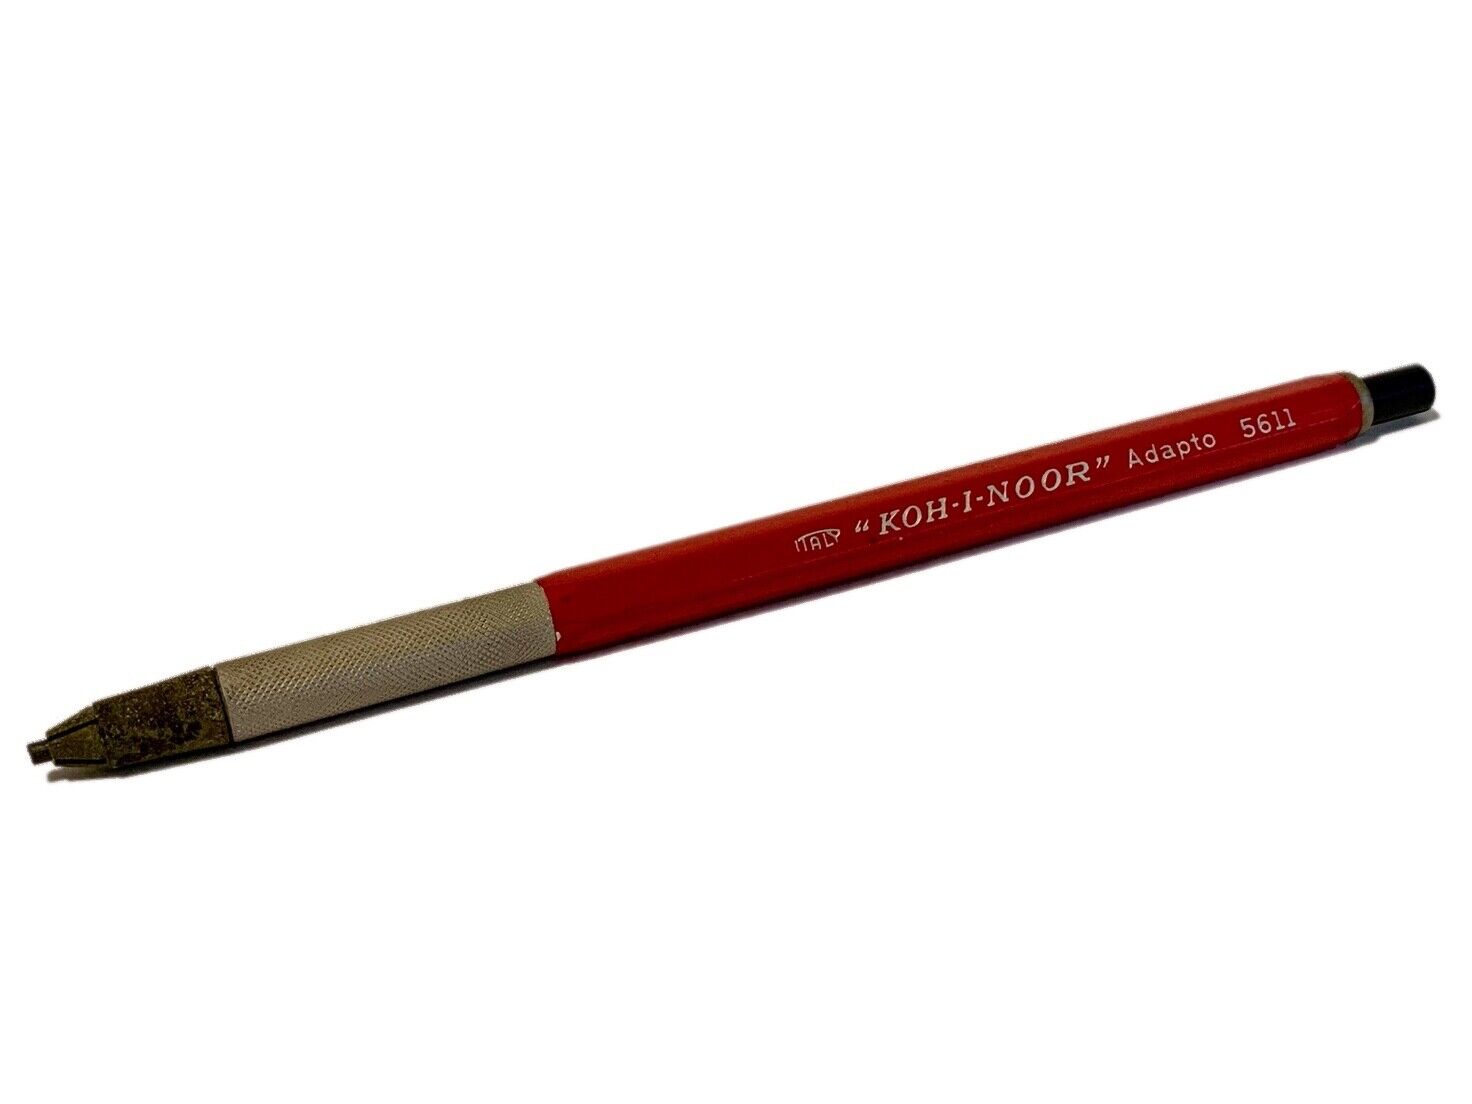 Vintage KOH-I-NOOR Adapto 5611 Lead Holder - Made in Italy - Drafting Pencil